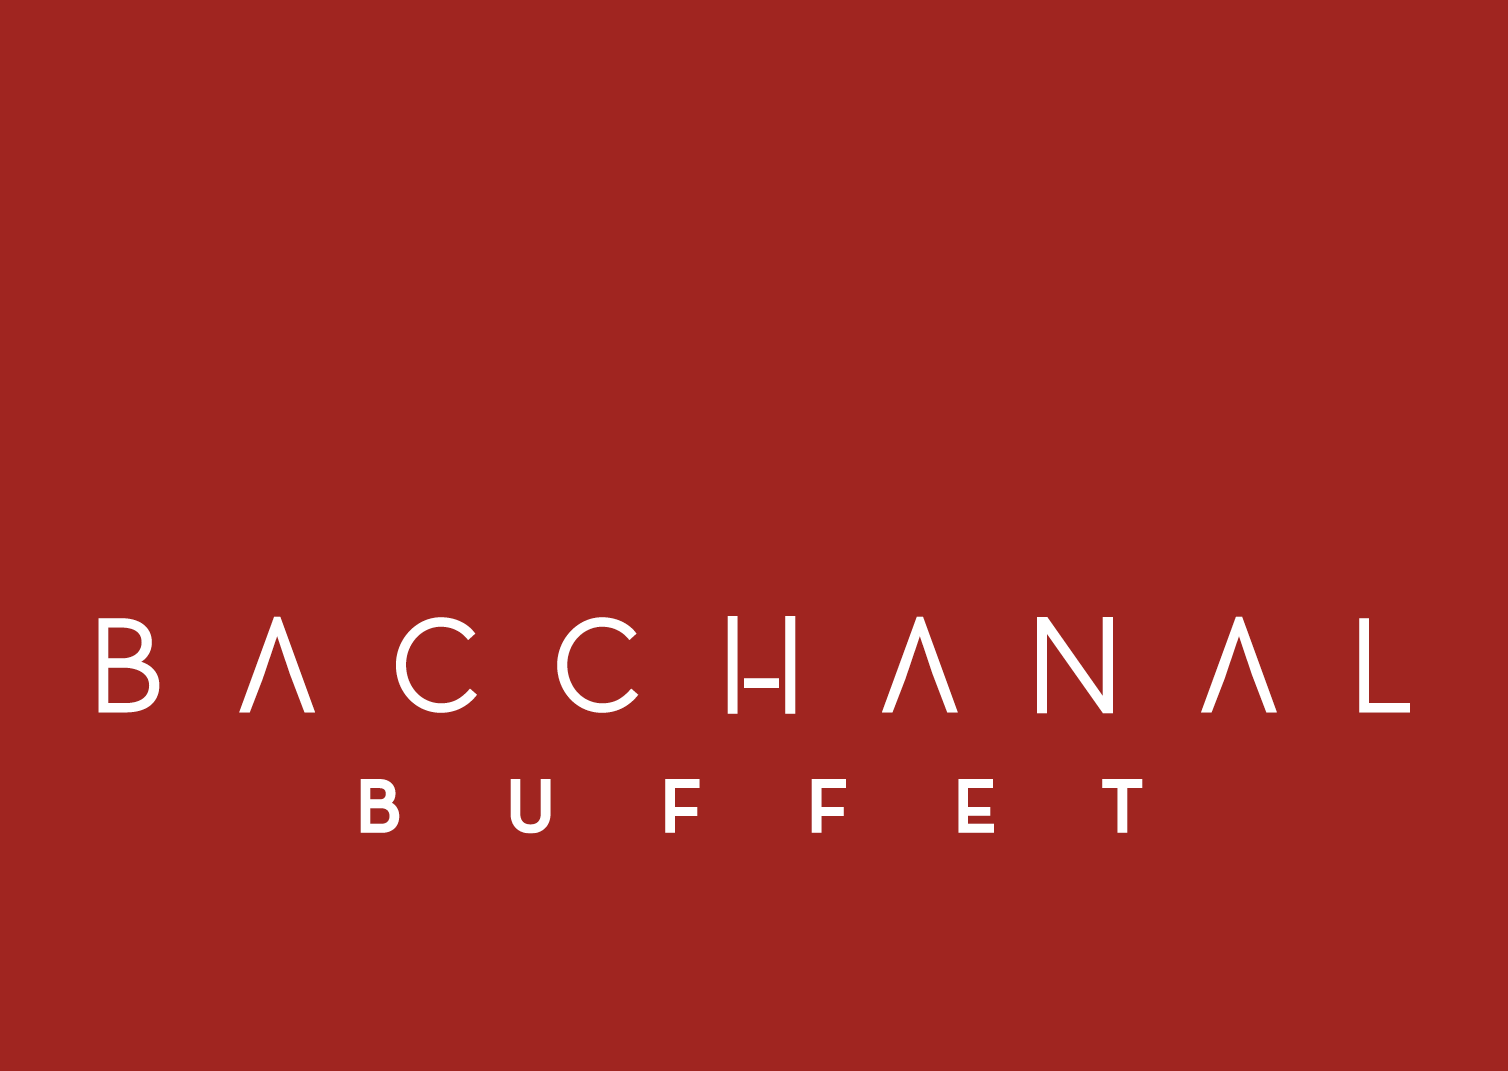 Bacchanal logo